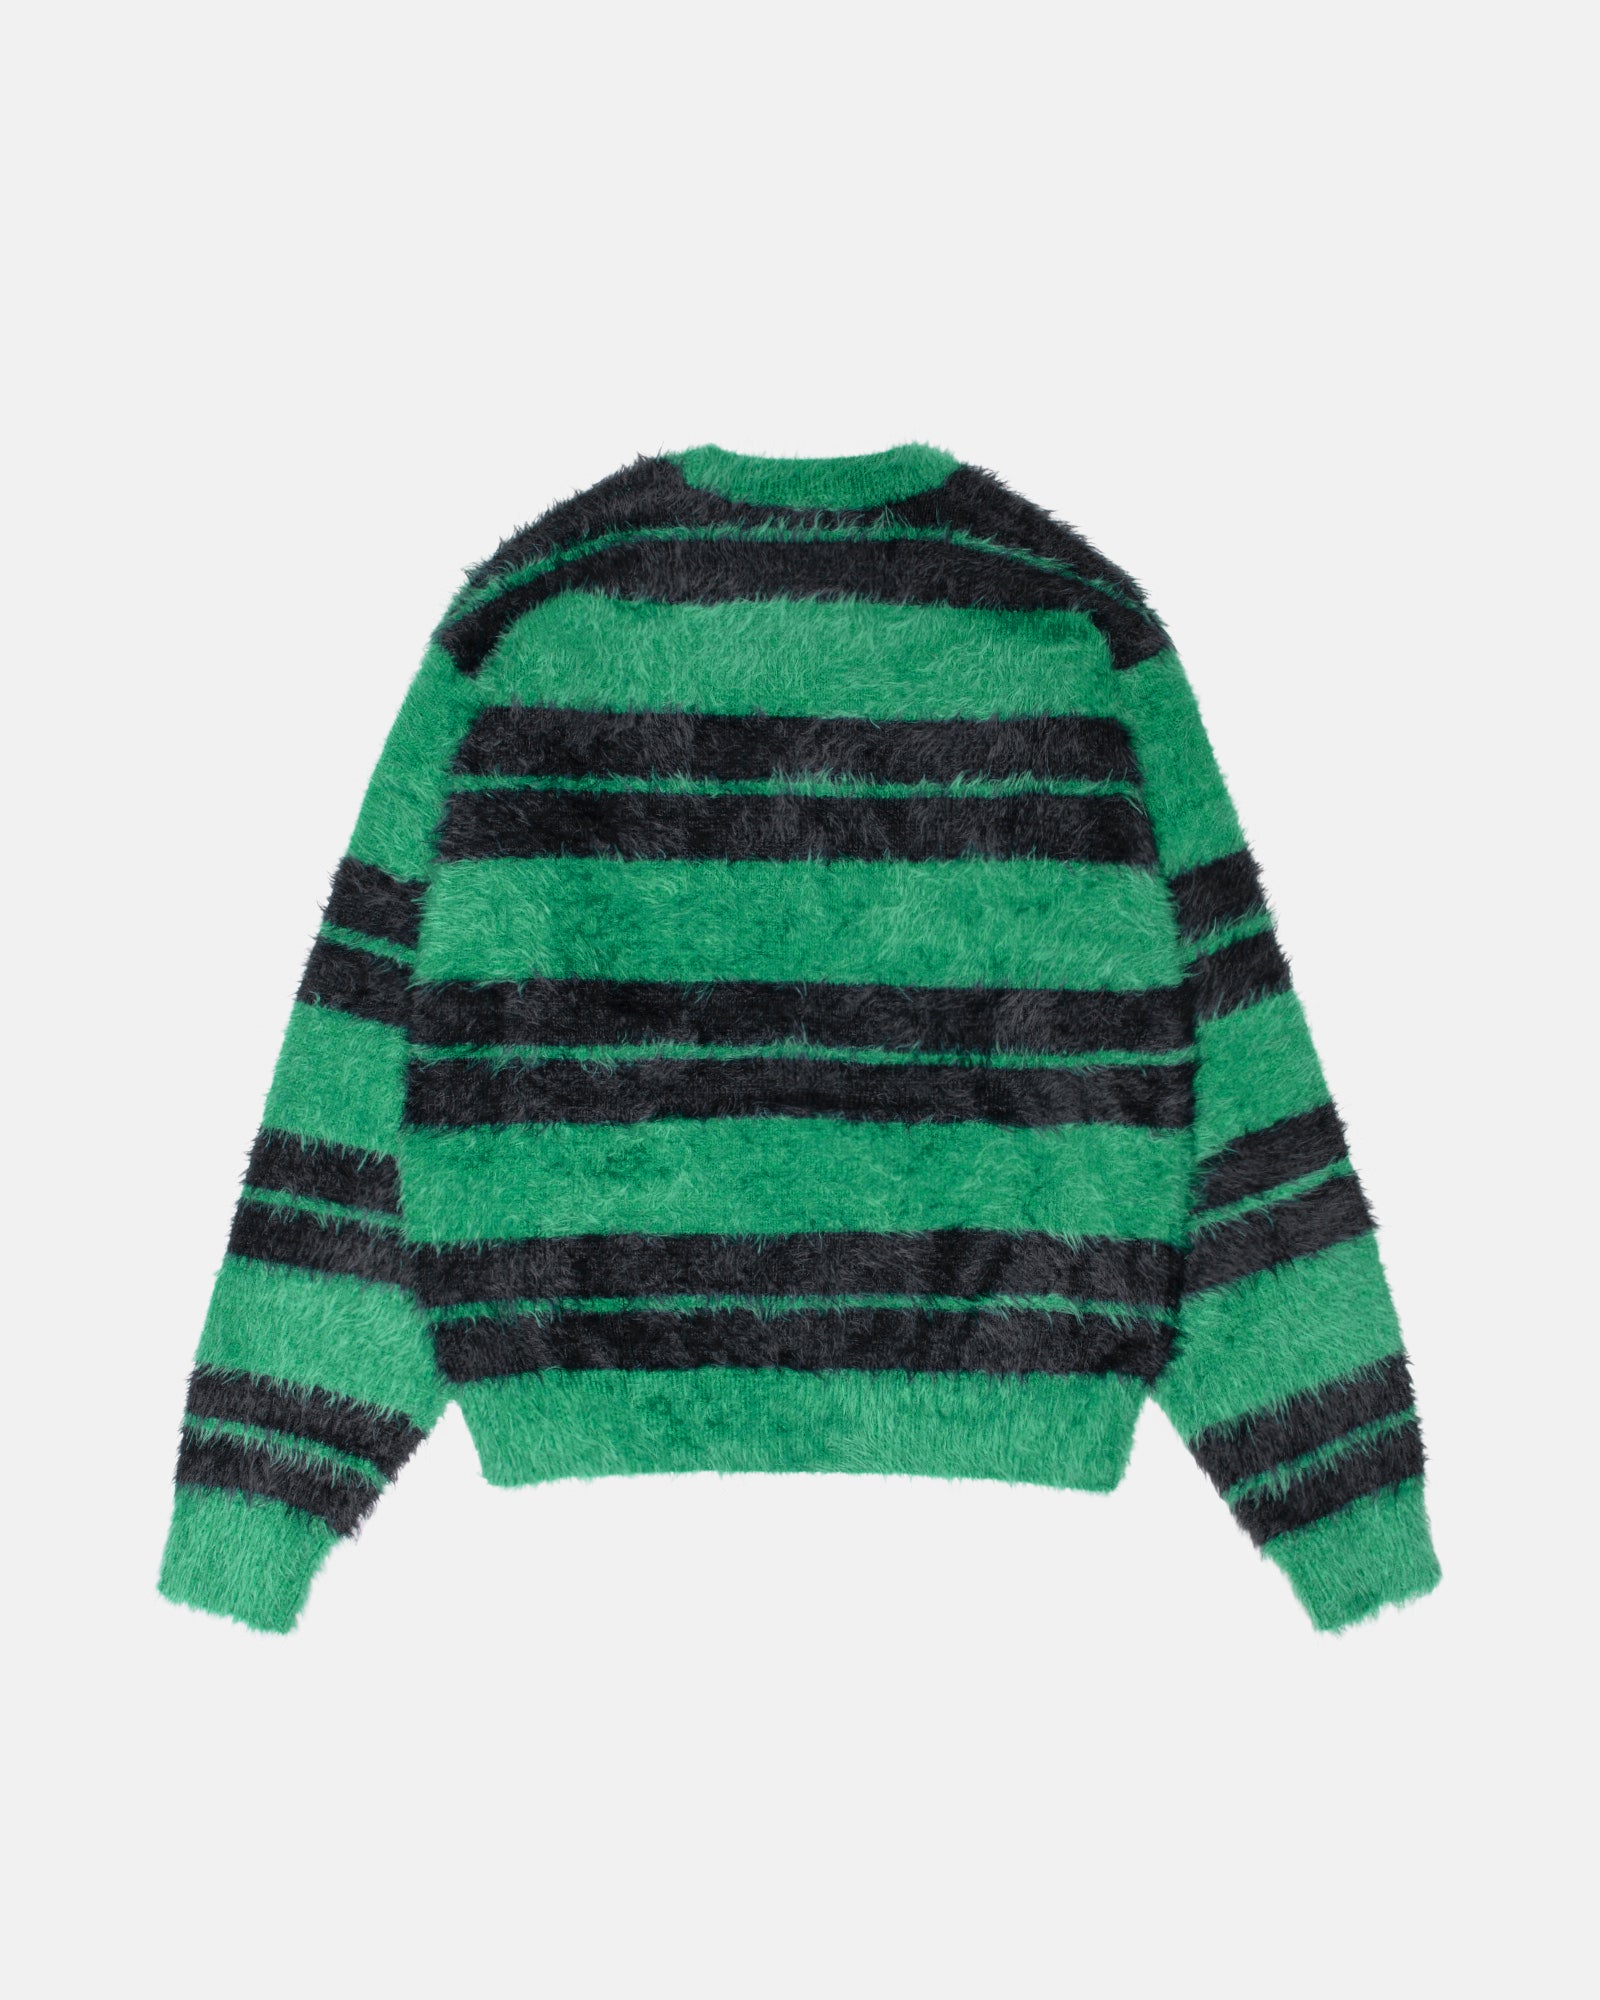 Hairy Stripe Crew Sweater Black/Green Knits